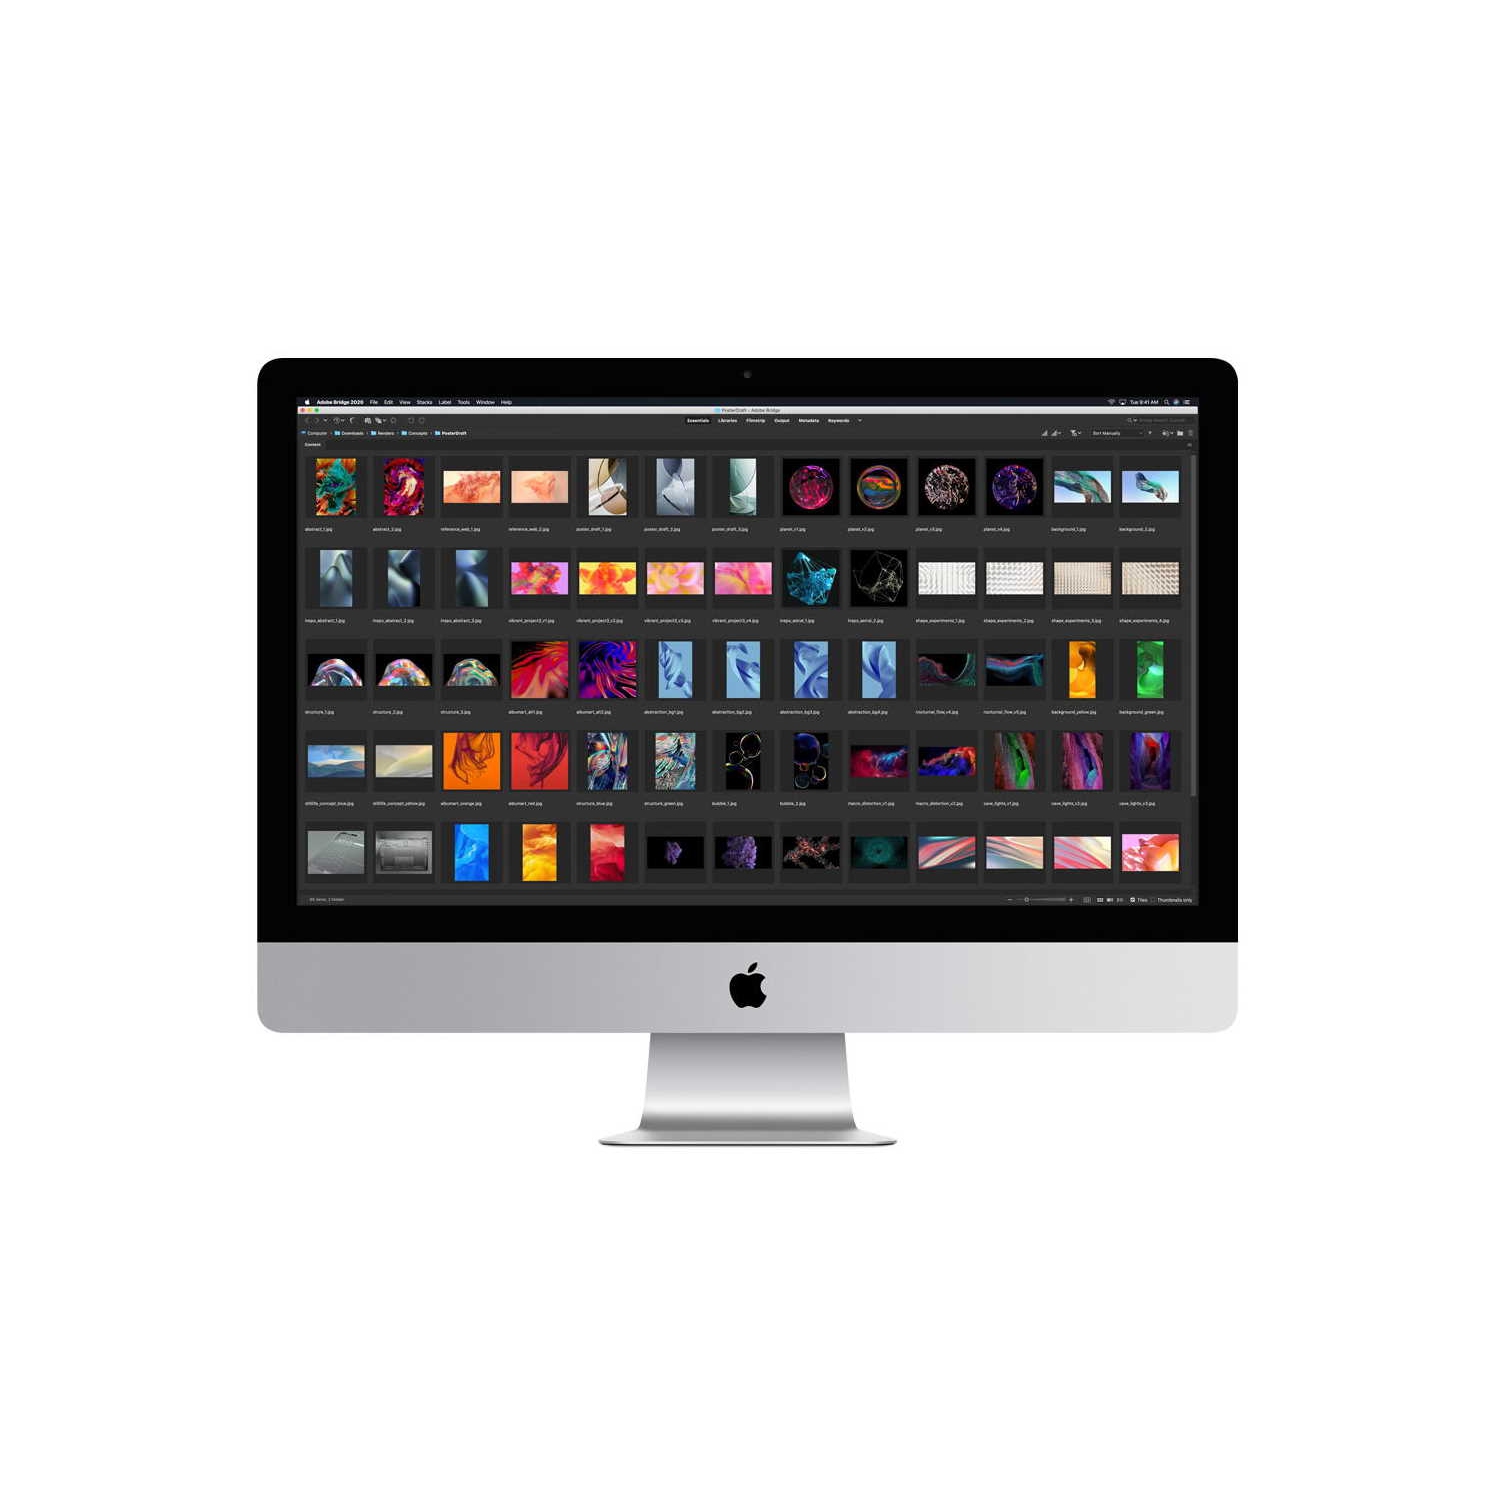 Refurbished - Good) iMac 27-inch (Retina 5K) 3.1GHZ 6-Core i5 